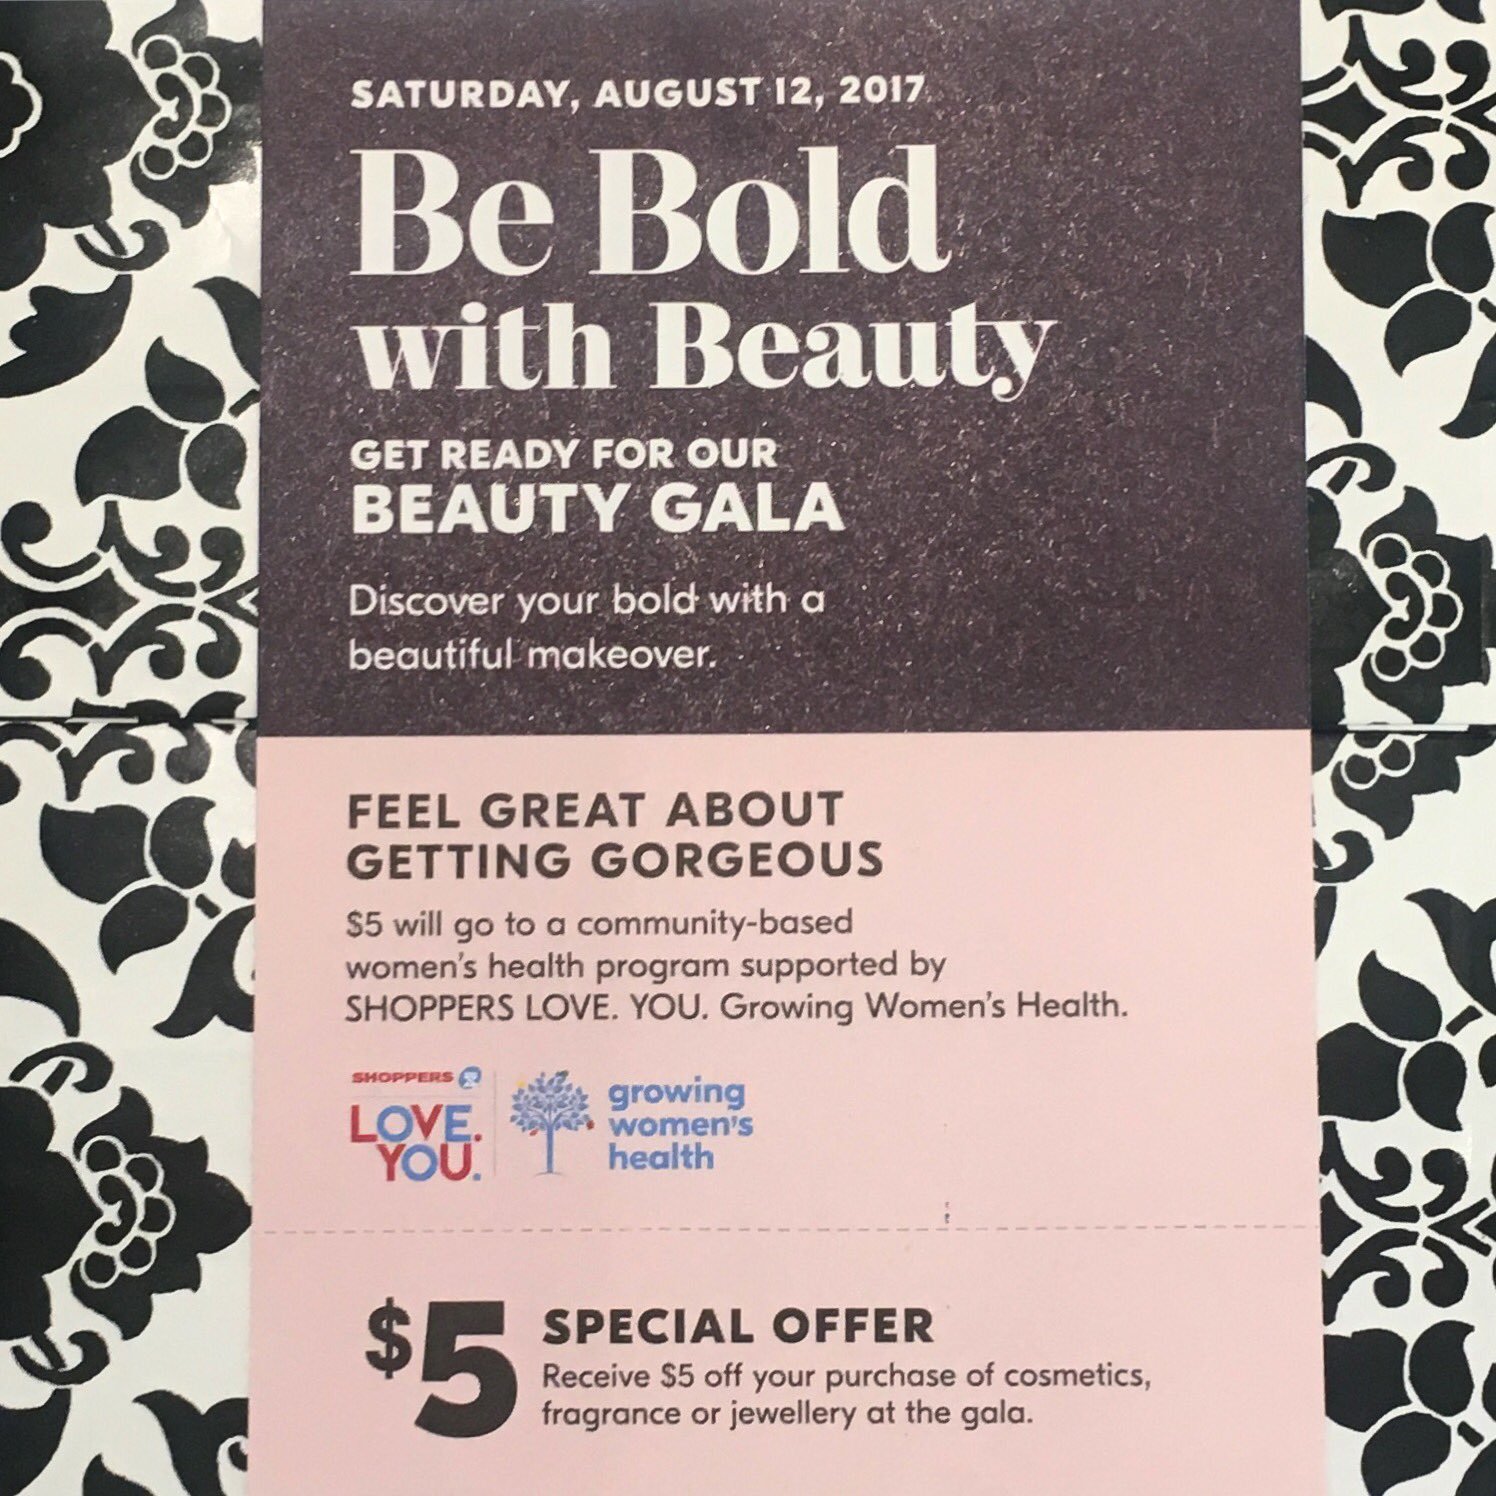 Shoppers Drug Mart 2017 Beauty Gala - August 12